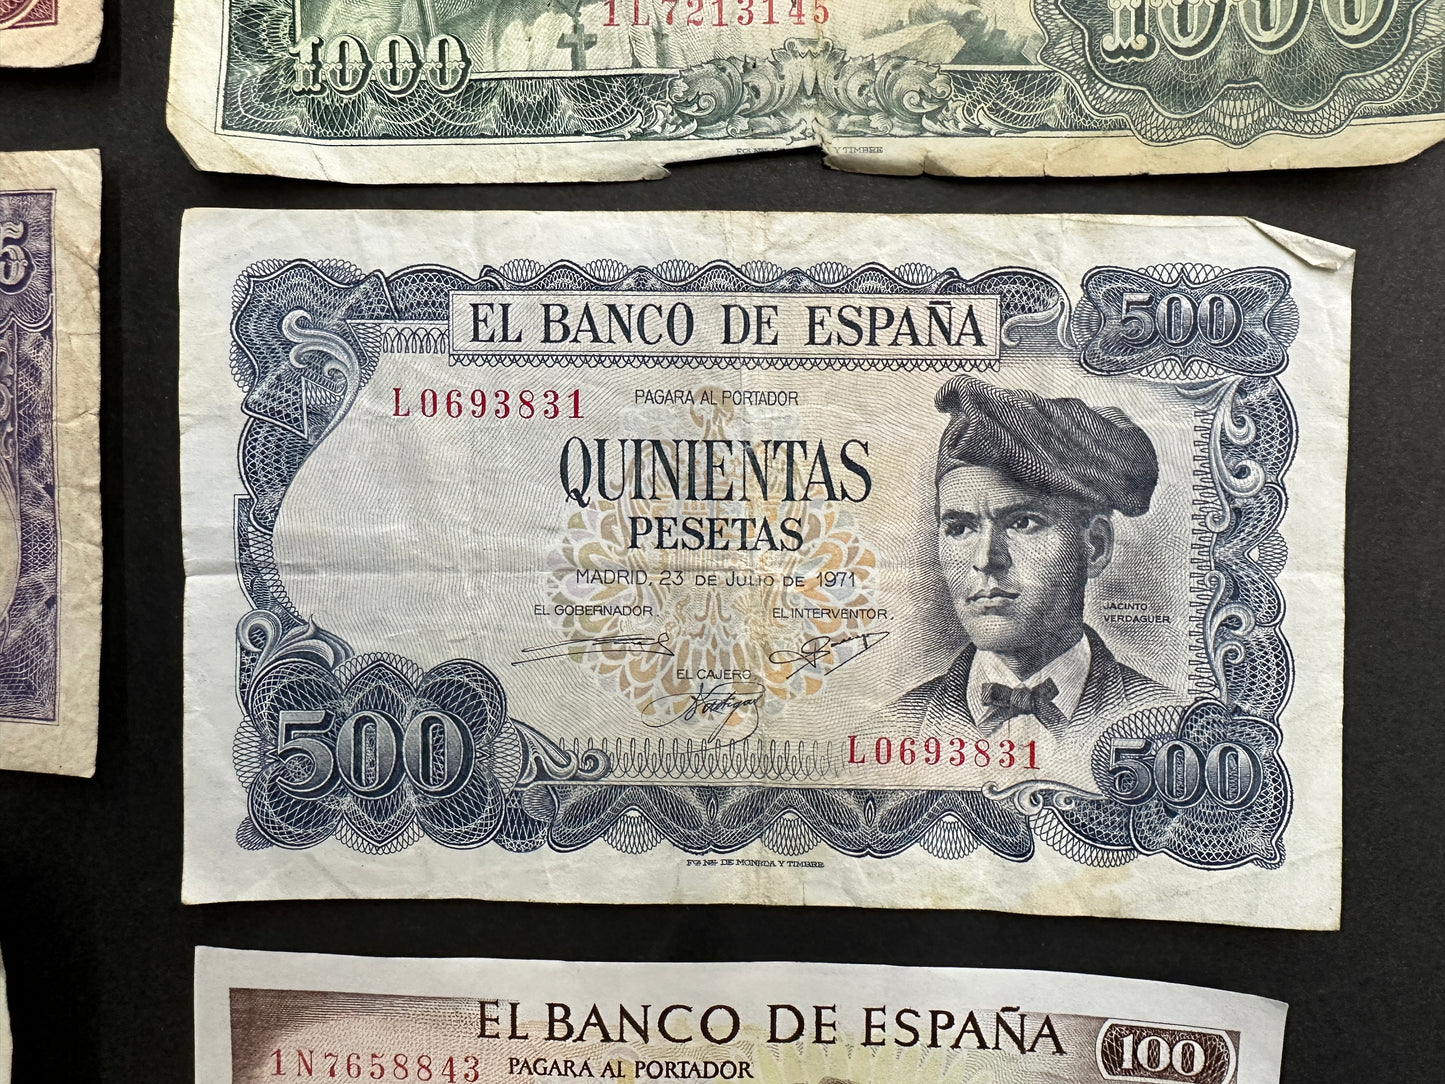 Rare Spanish Peseta Banknotes 1951 to 1971